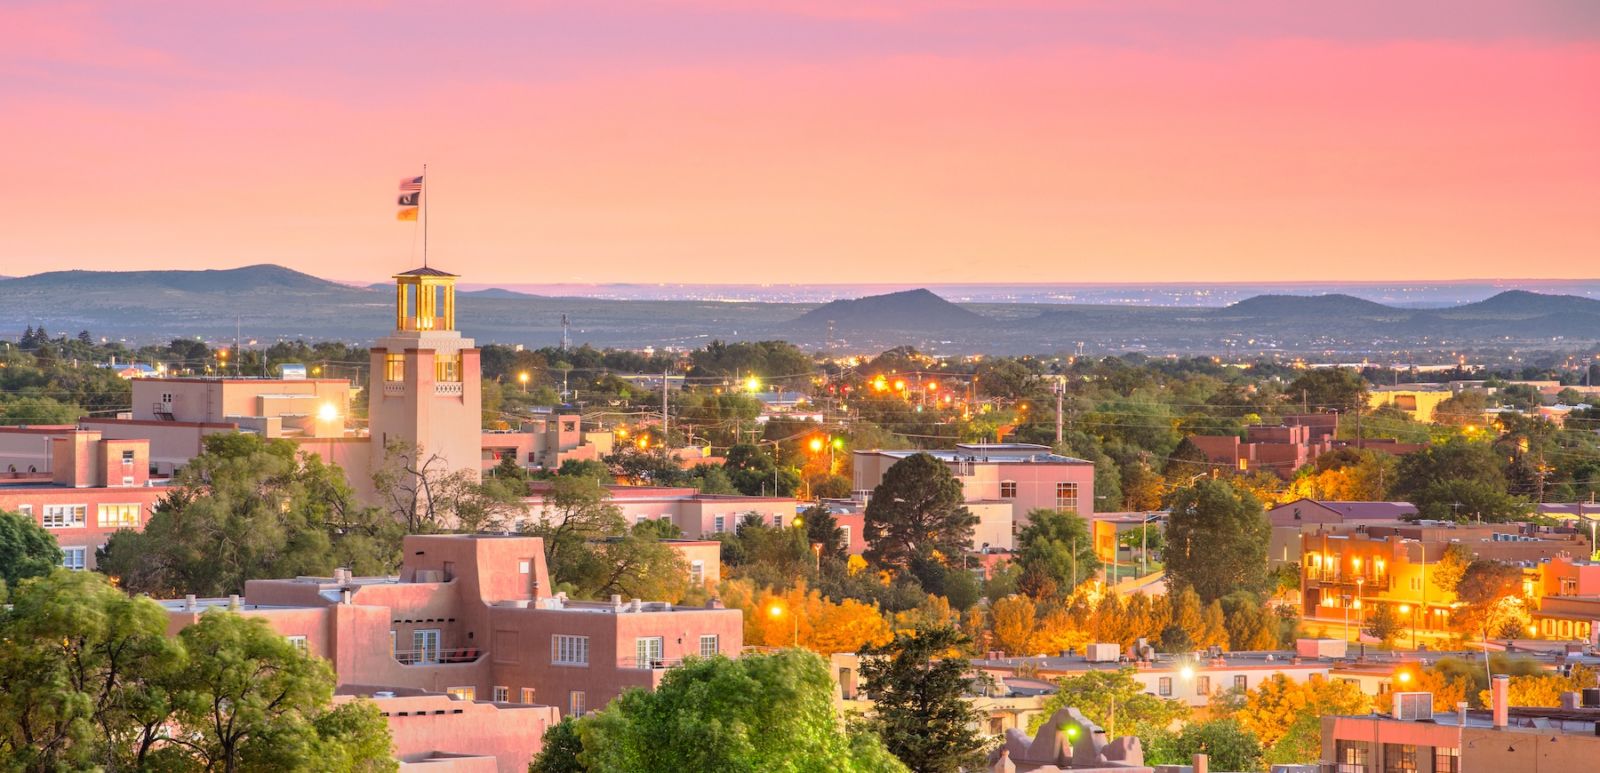 Santa Fe, New Mexico's downtown skyline at dusk. Photo via Shutterstock.